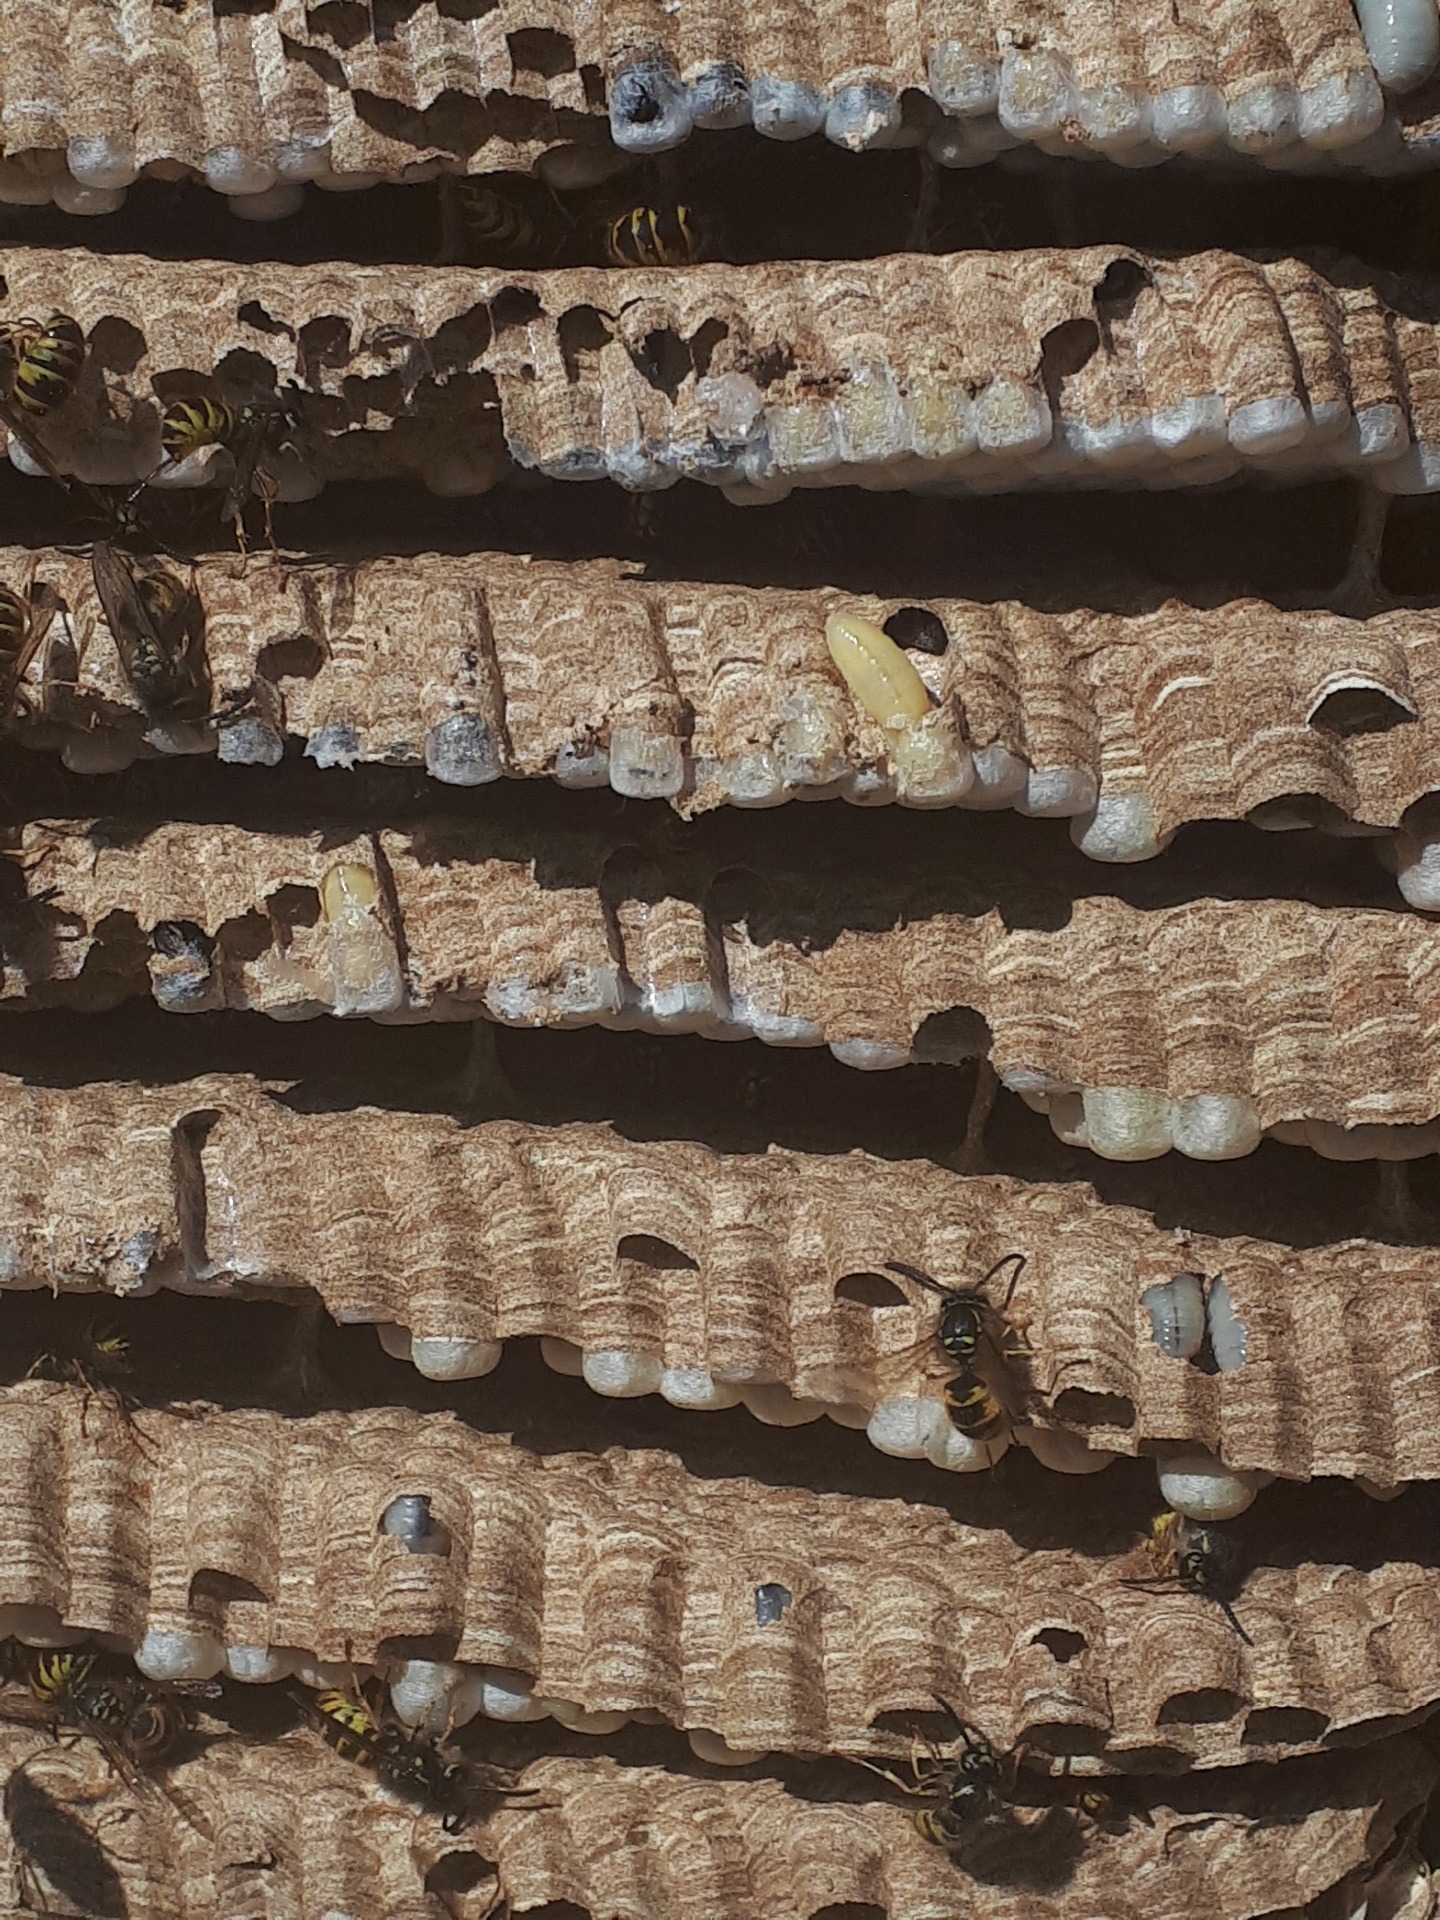 Inside a wasp nest